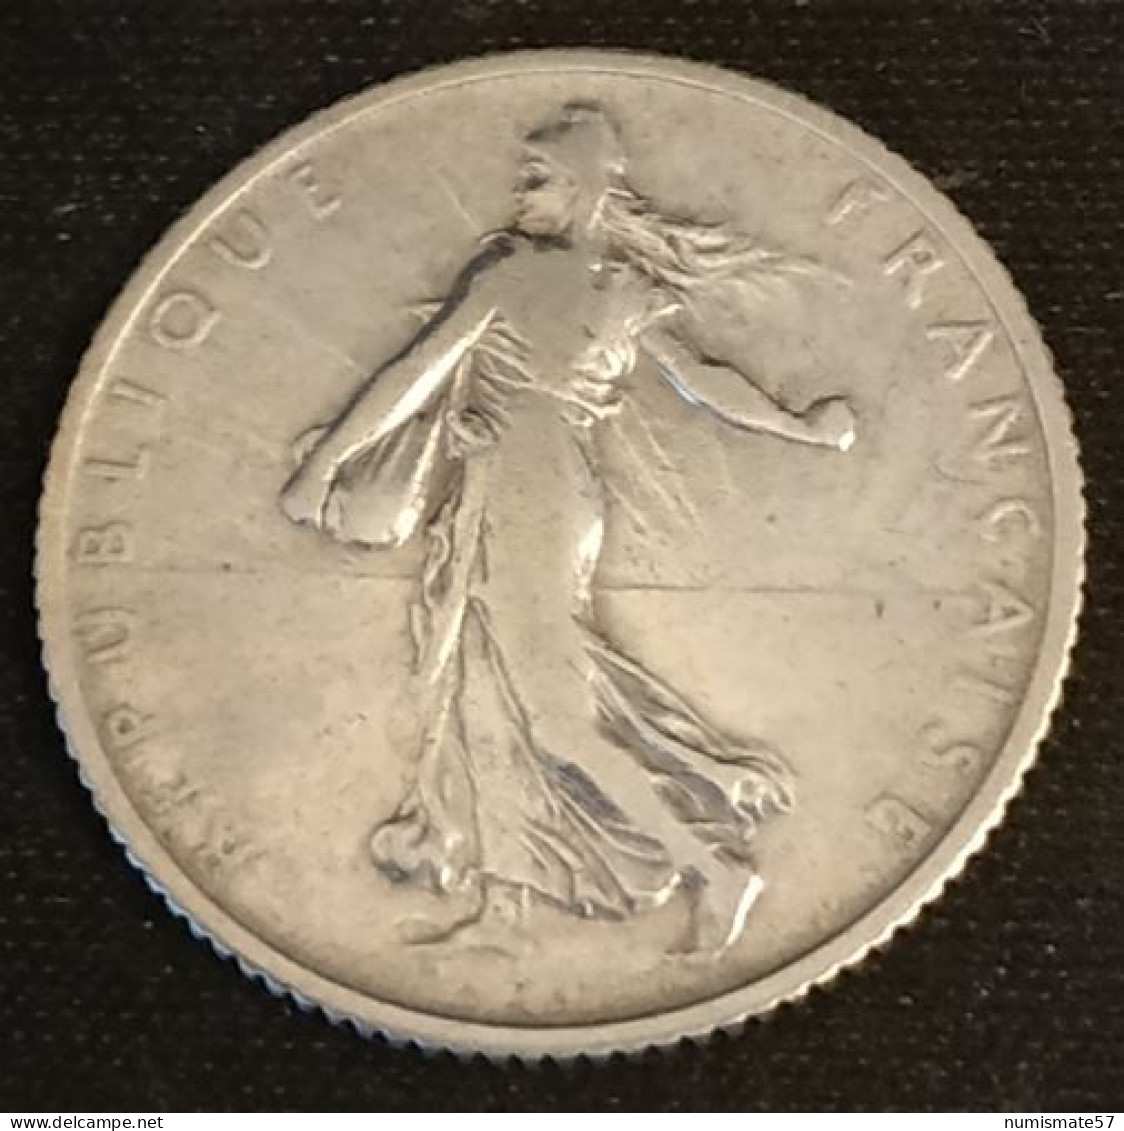 FRANCE - 1 FRANC 1911 - Semeuse - Argent - Silver - Gad 467 - KM 844 - 1 Franc